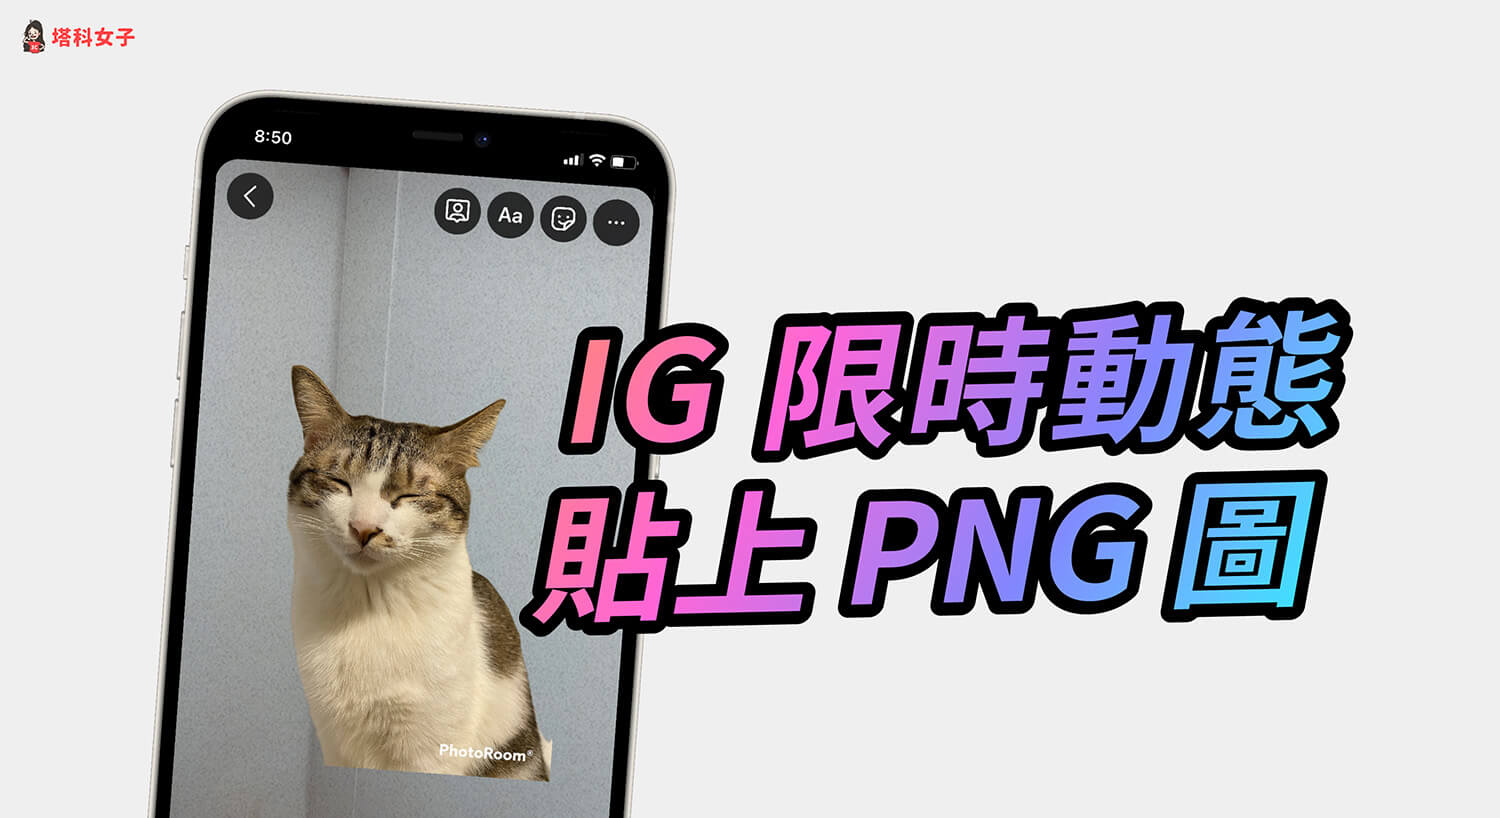 IG 限時動態怎麼上傳已去背的透明背景 PNG 圖片？iOS / Android 教學